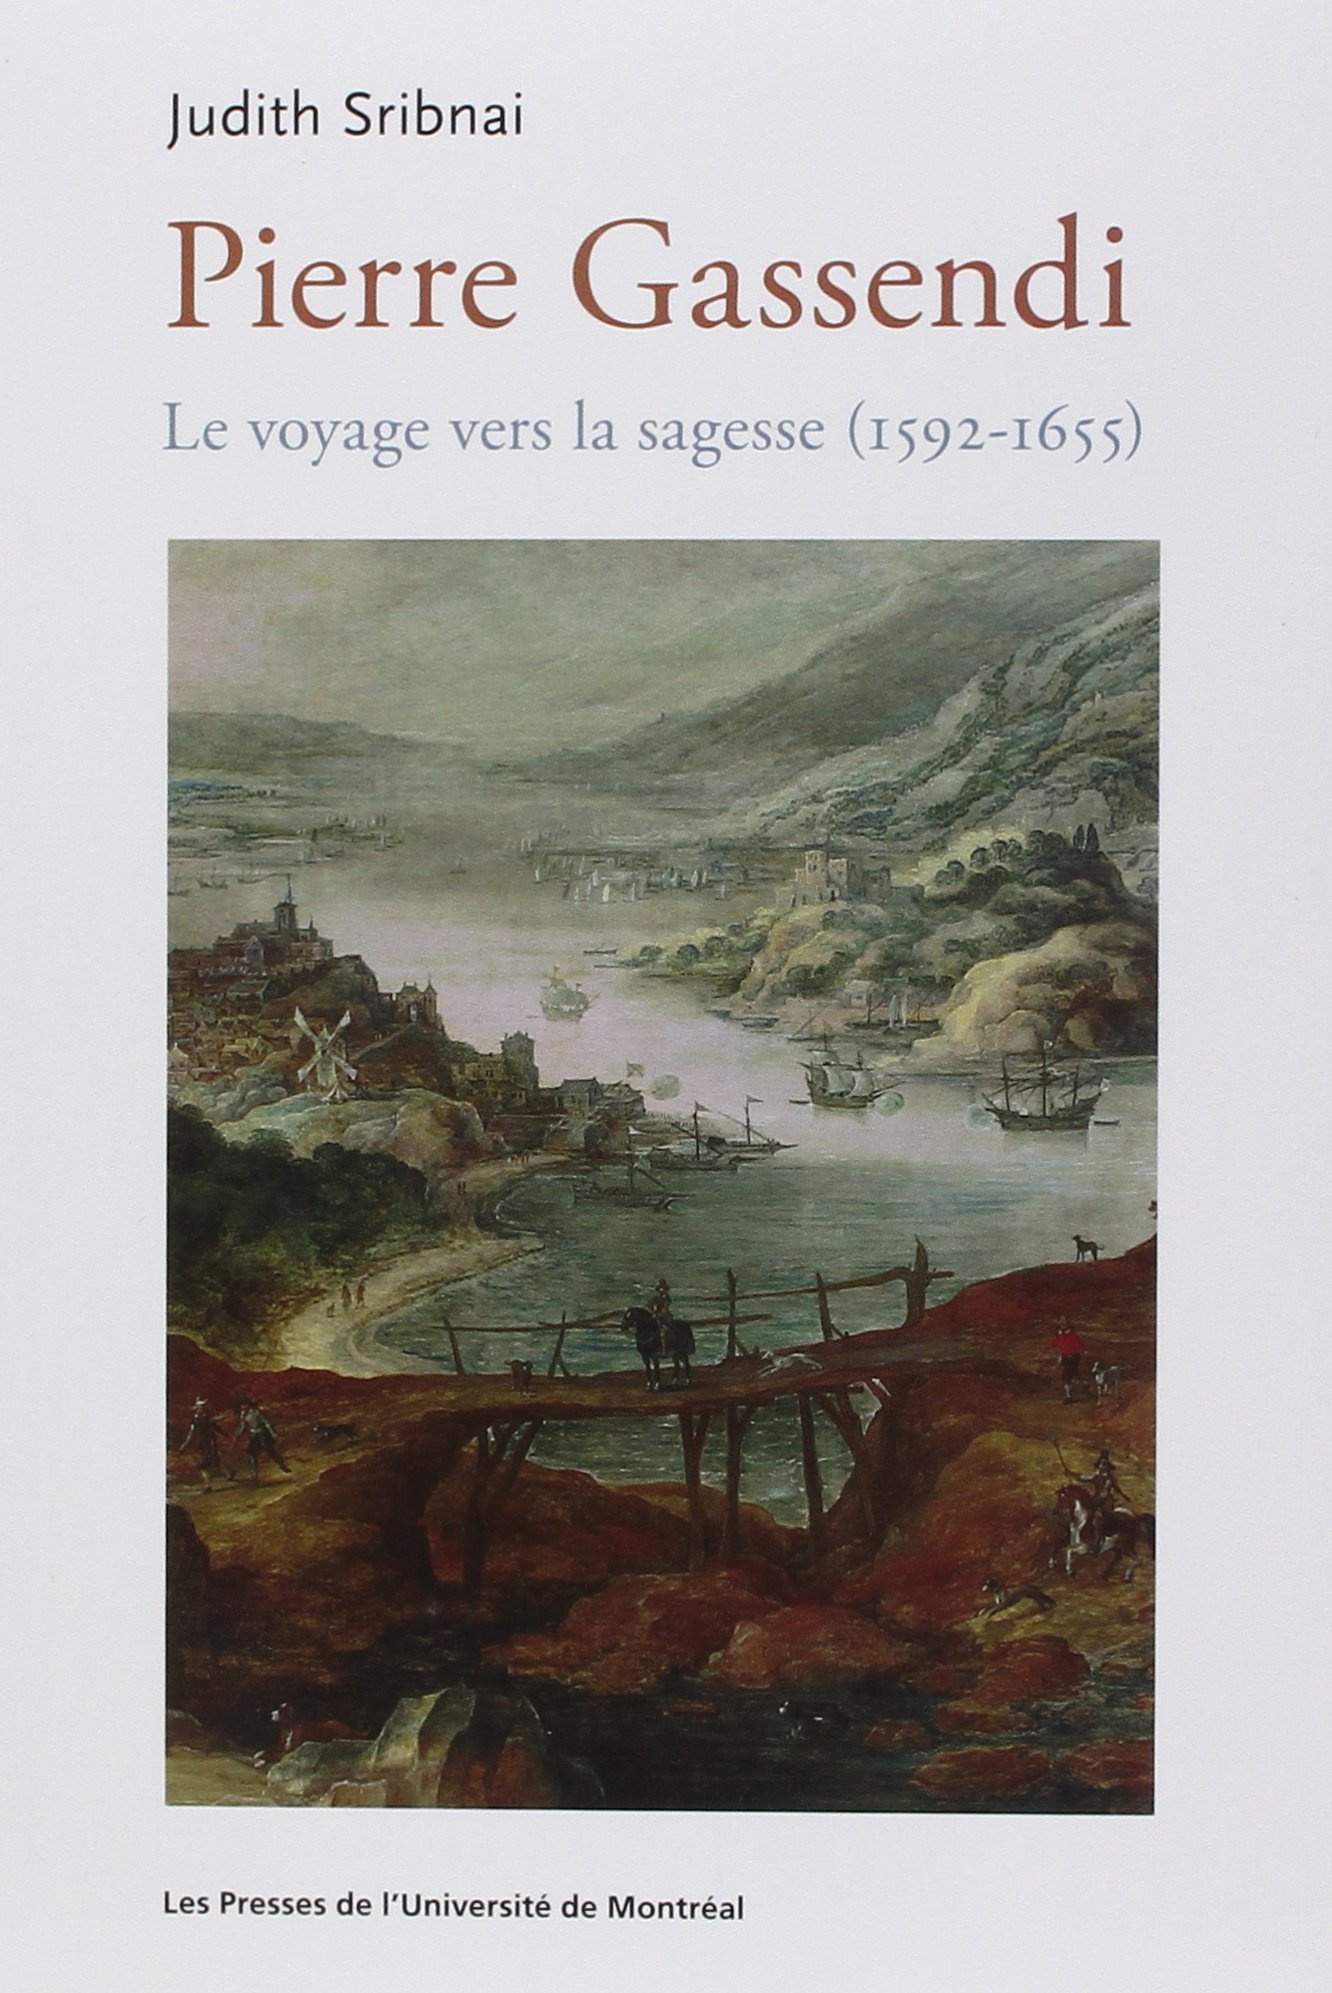 Pierre Gassendi: Le voyage vers la sagesse (1592-1655)